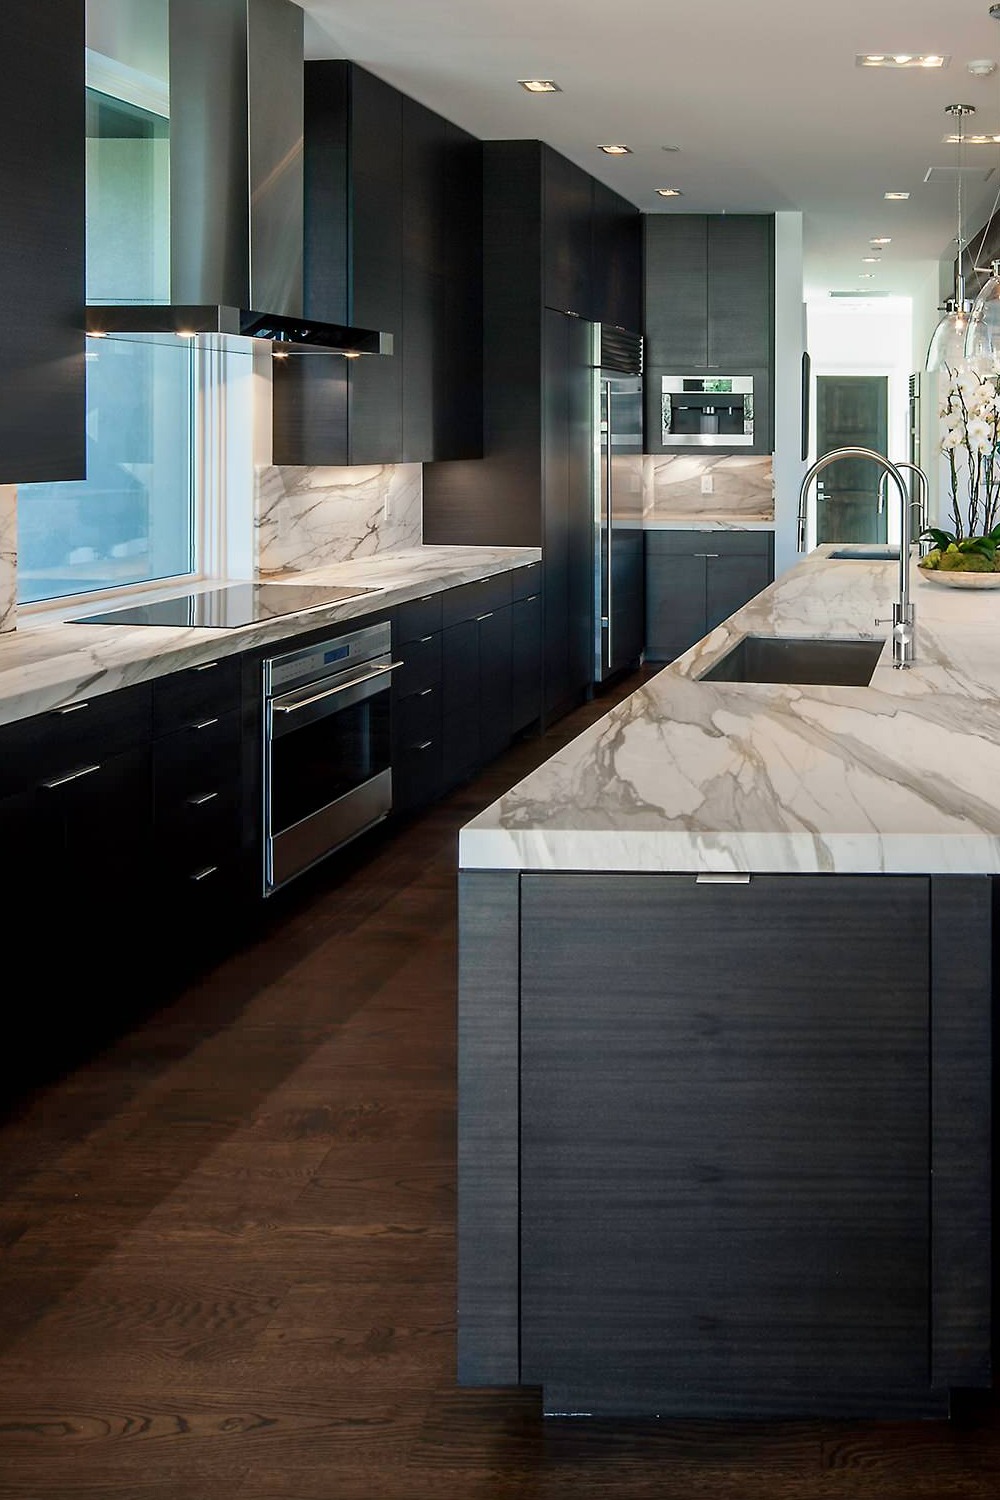 Kitchen Sink Ideas Stainless Steel Undermount Sinks Marble Countertop Copper Sink Surface Bar